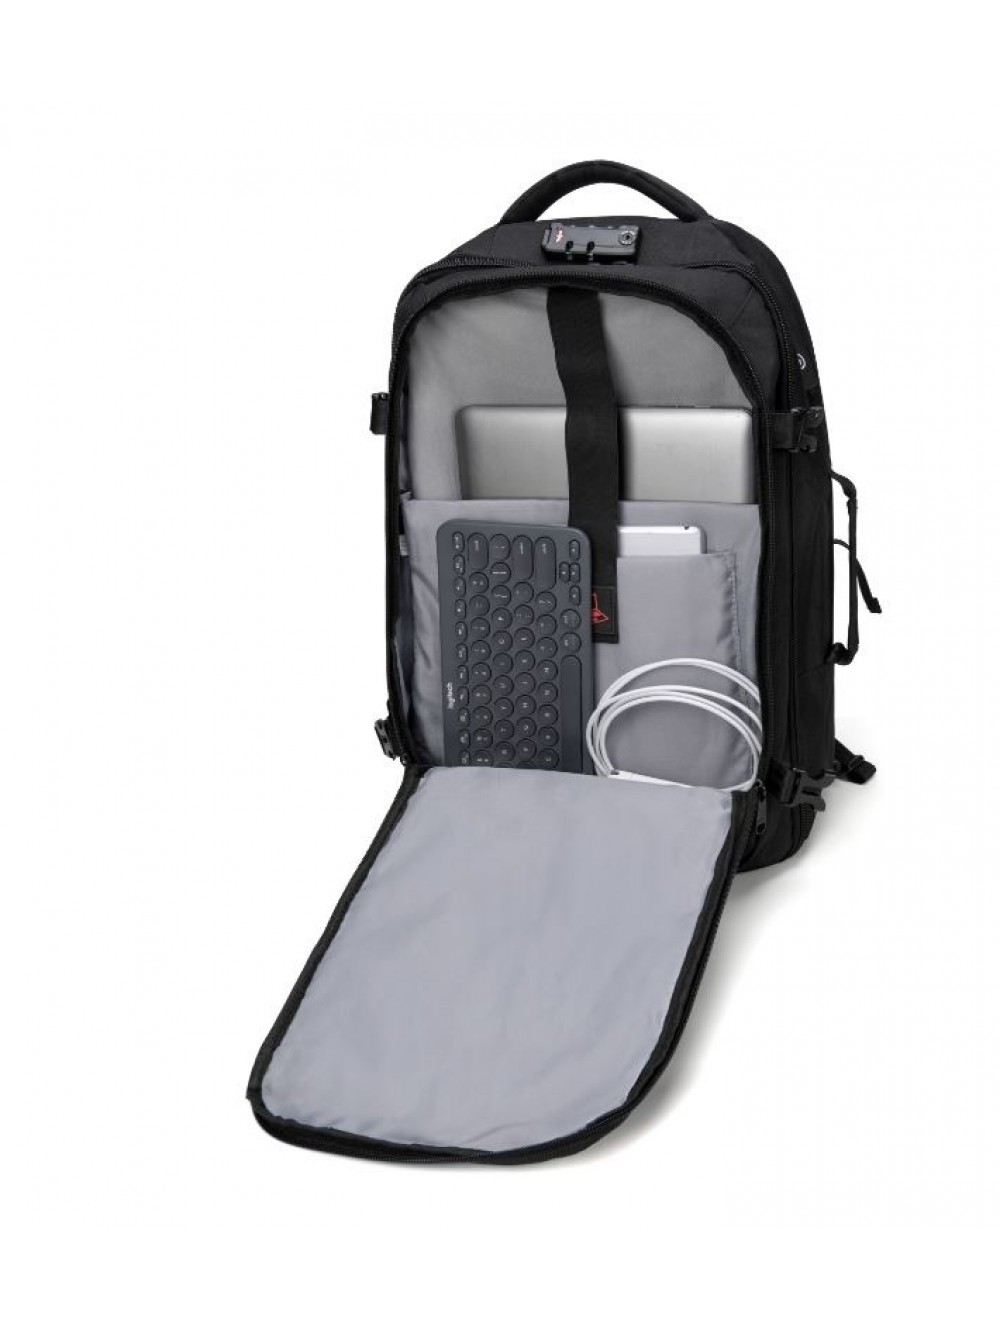 i-stay 15.6” Laptop Cabin Backpack – is0214 Black